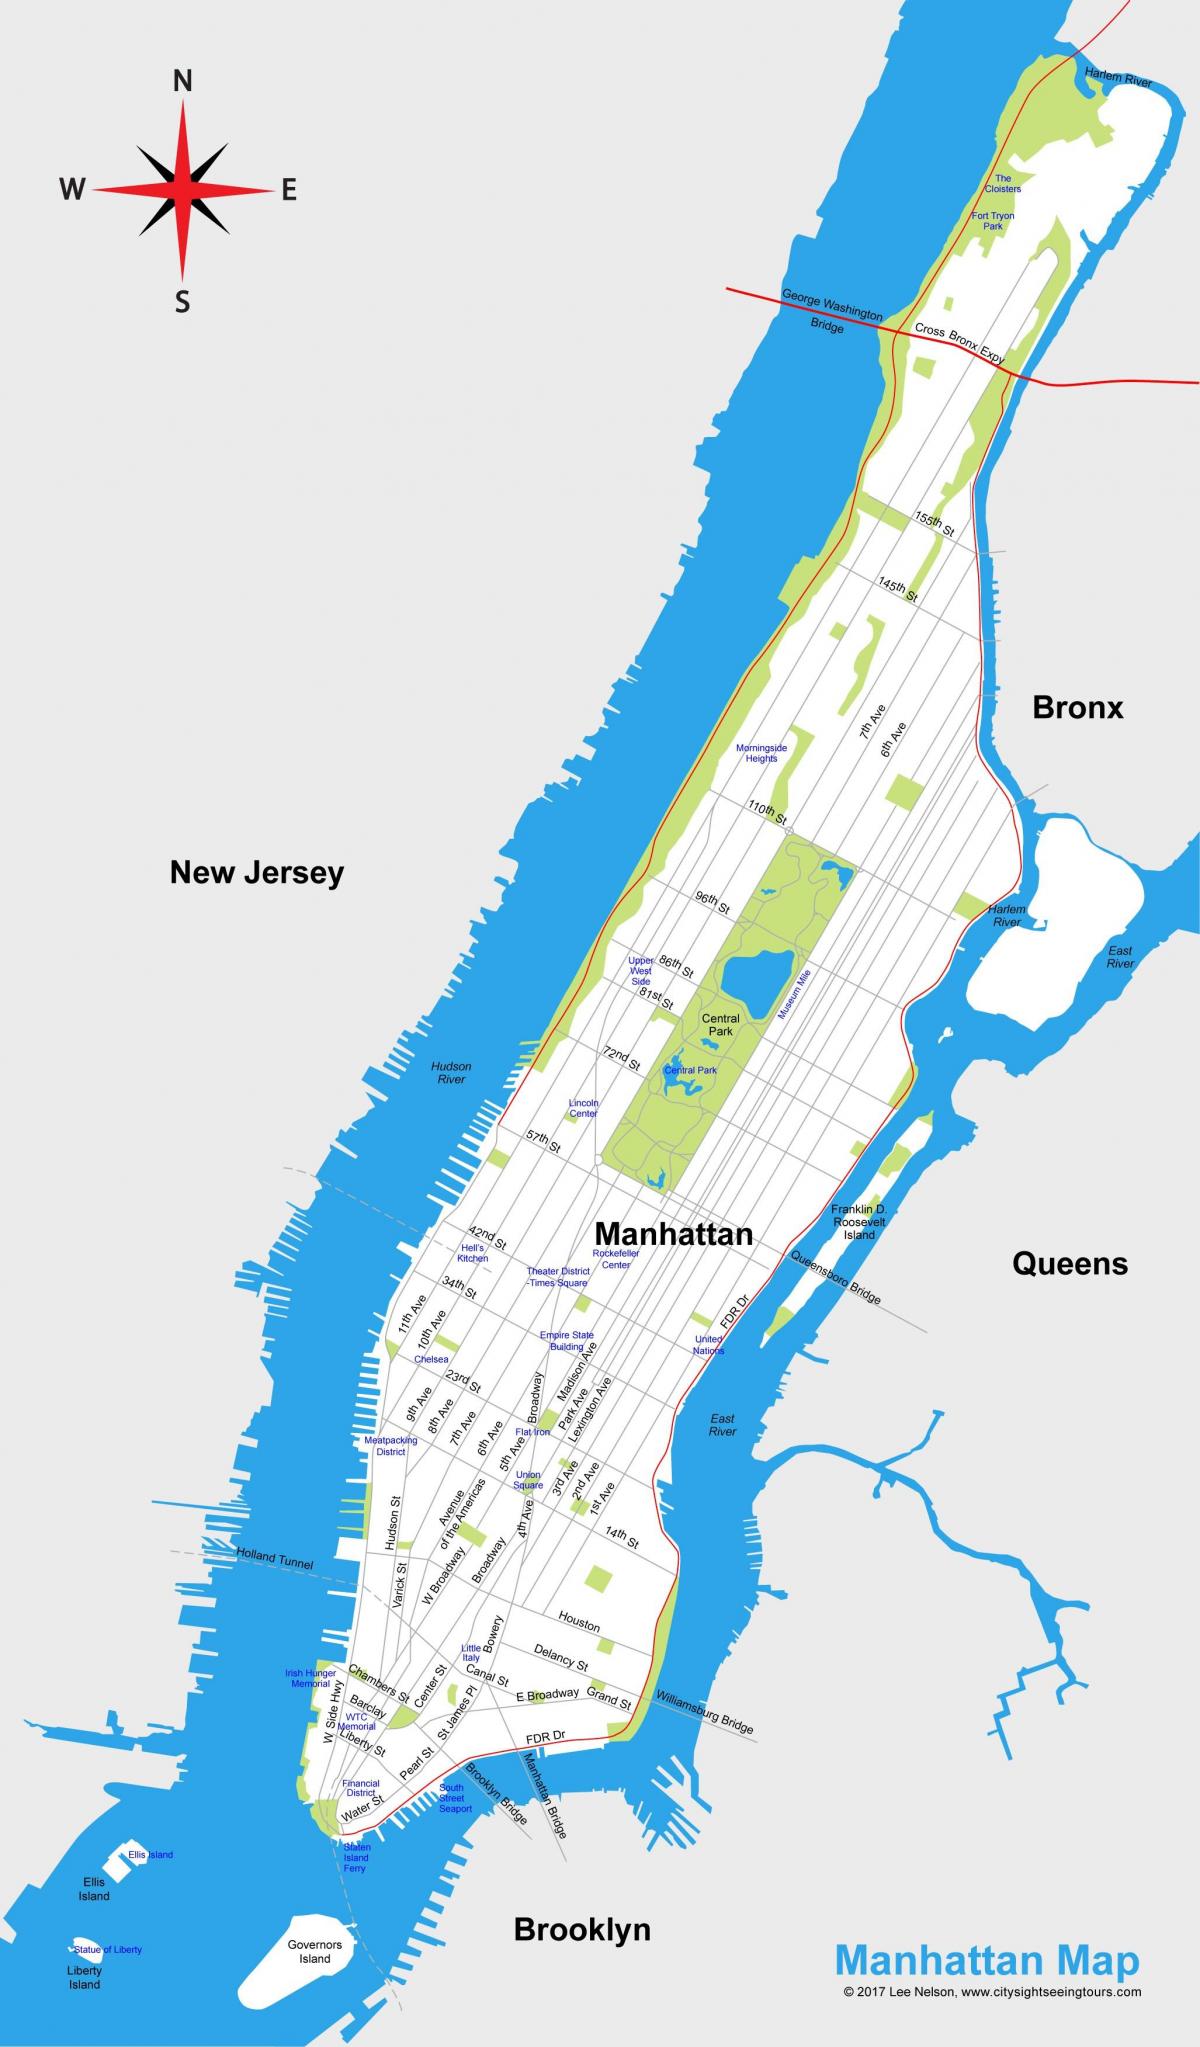 Manhattan peta bandar cetak